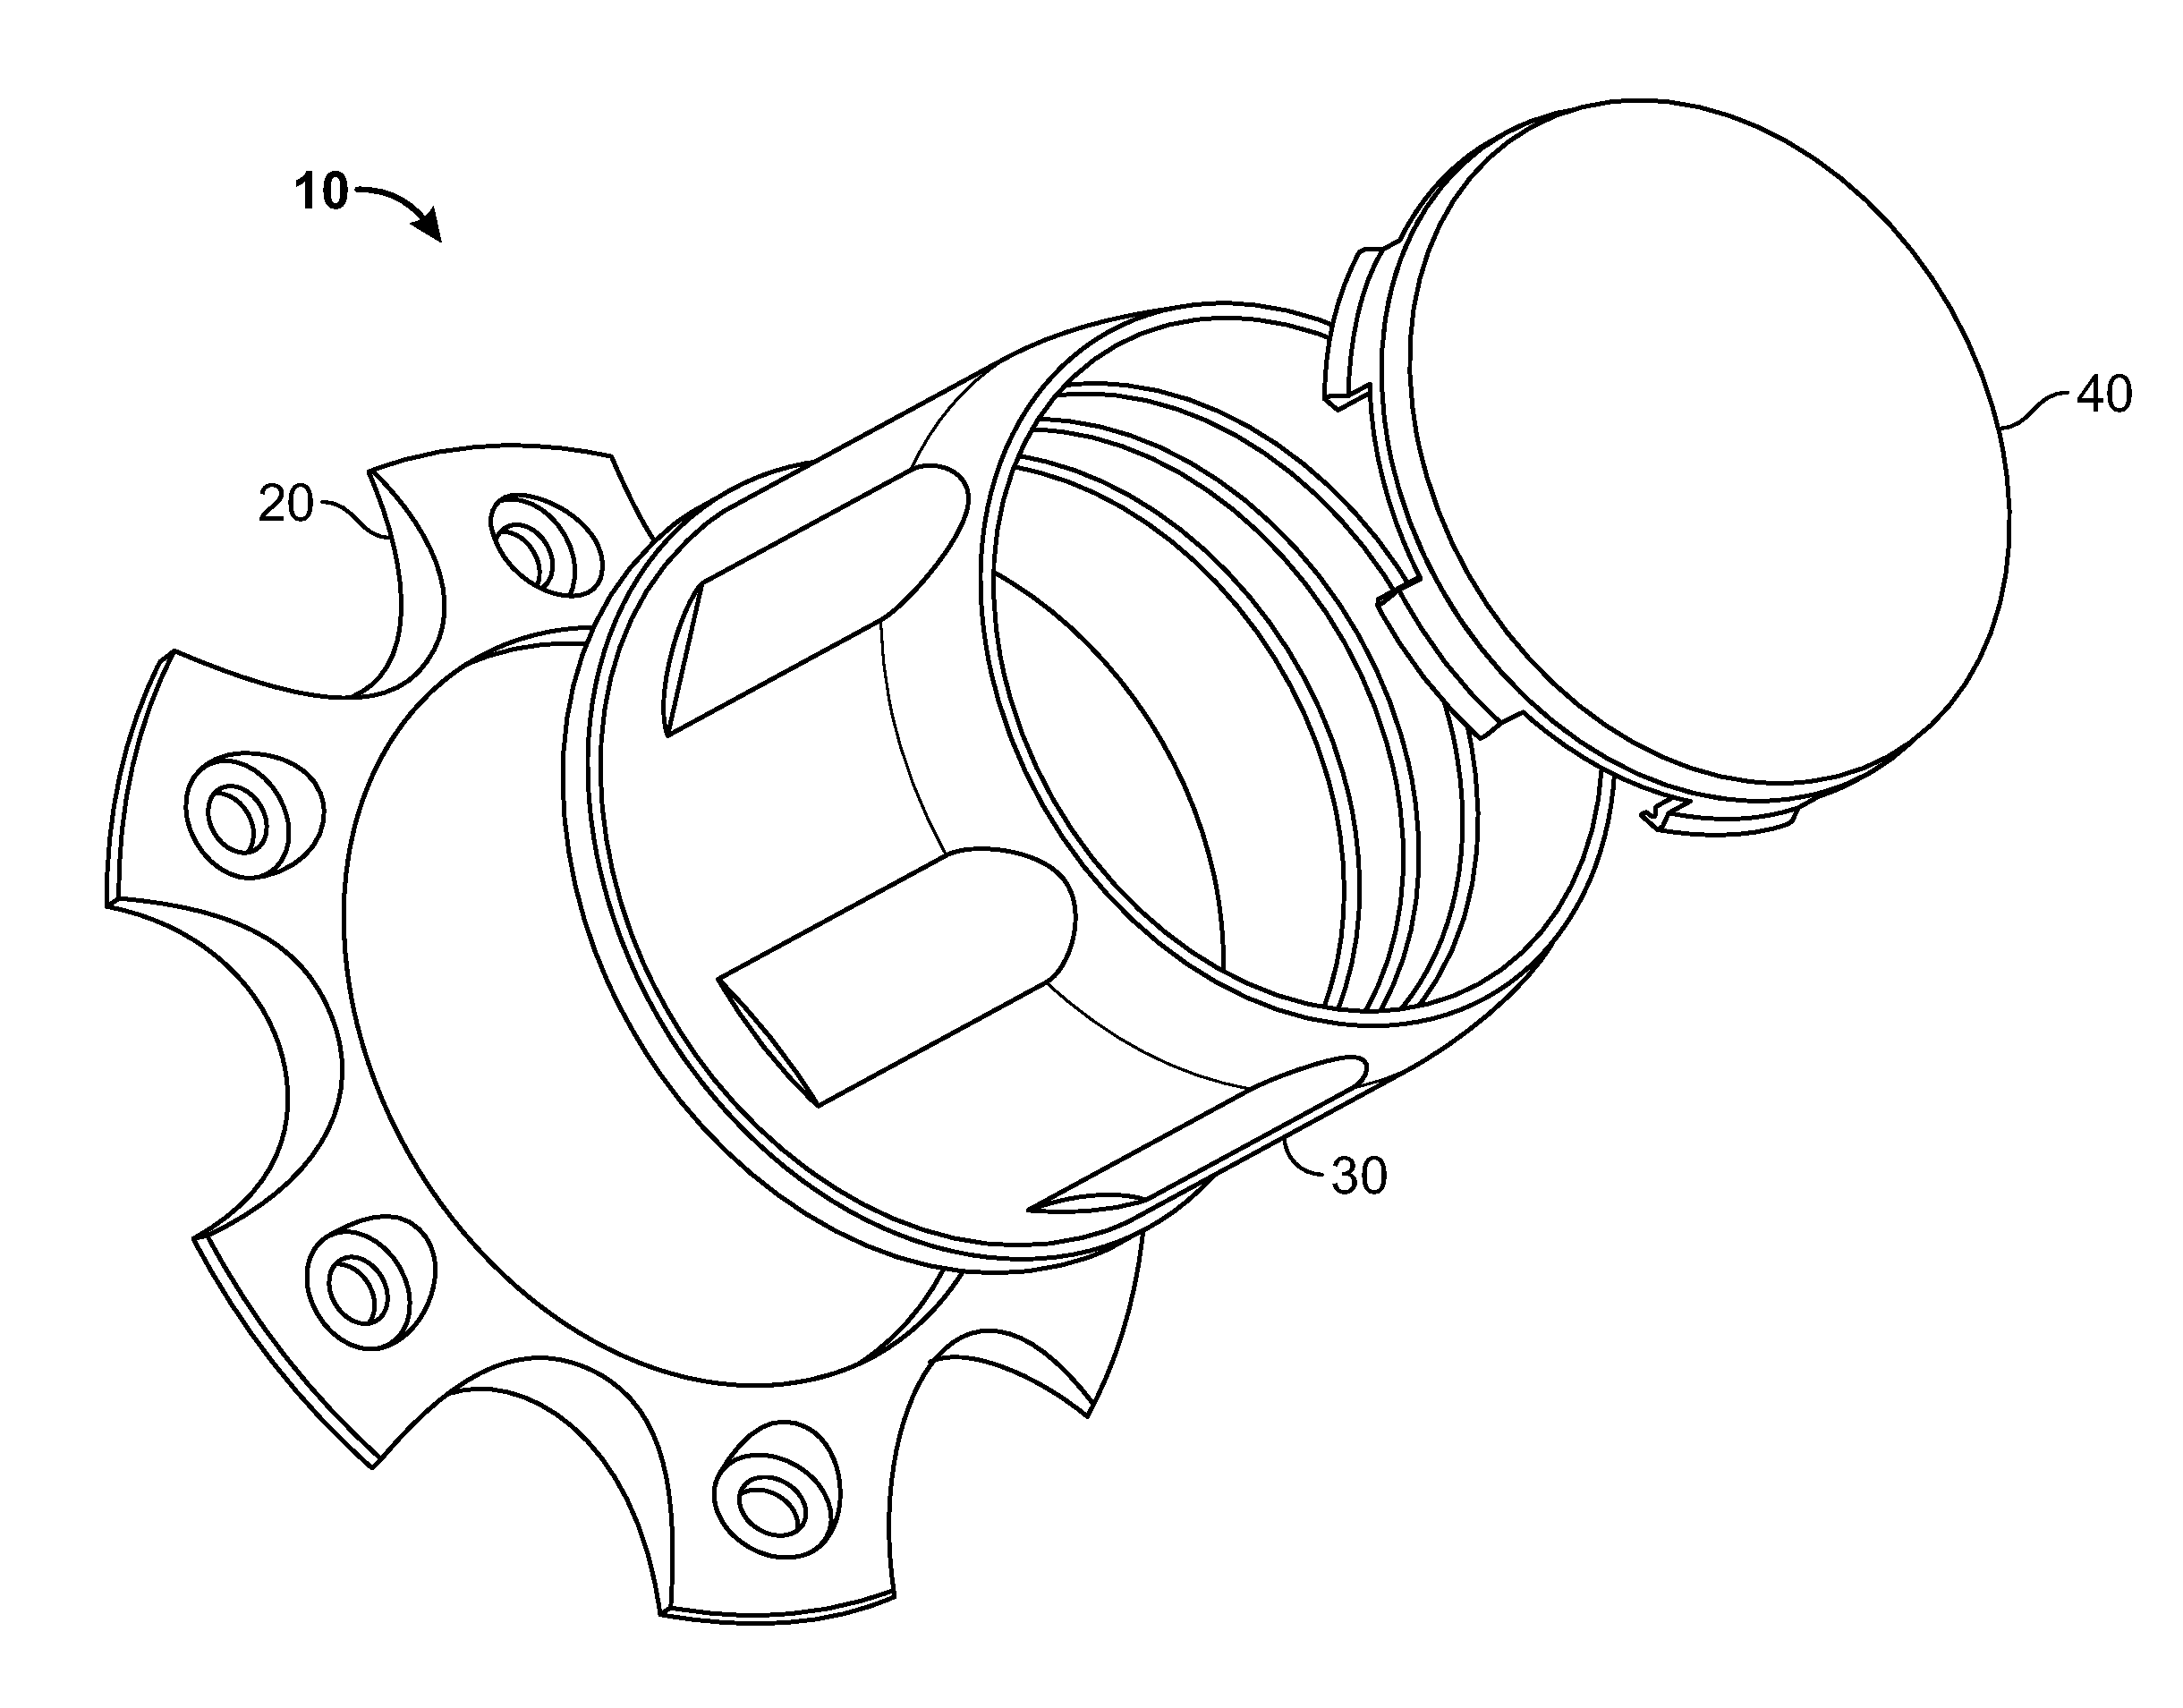 Modular wheel center cap system